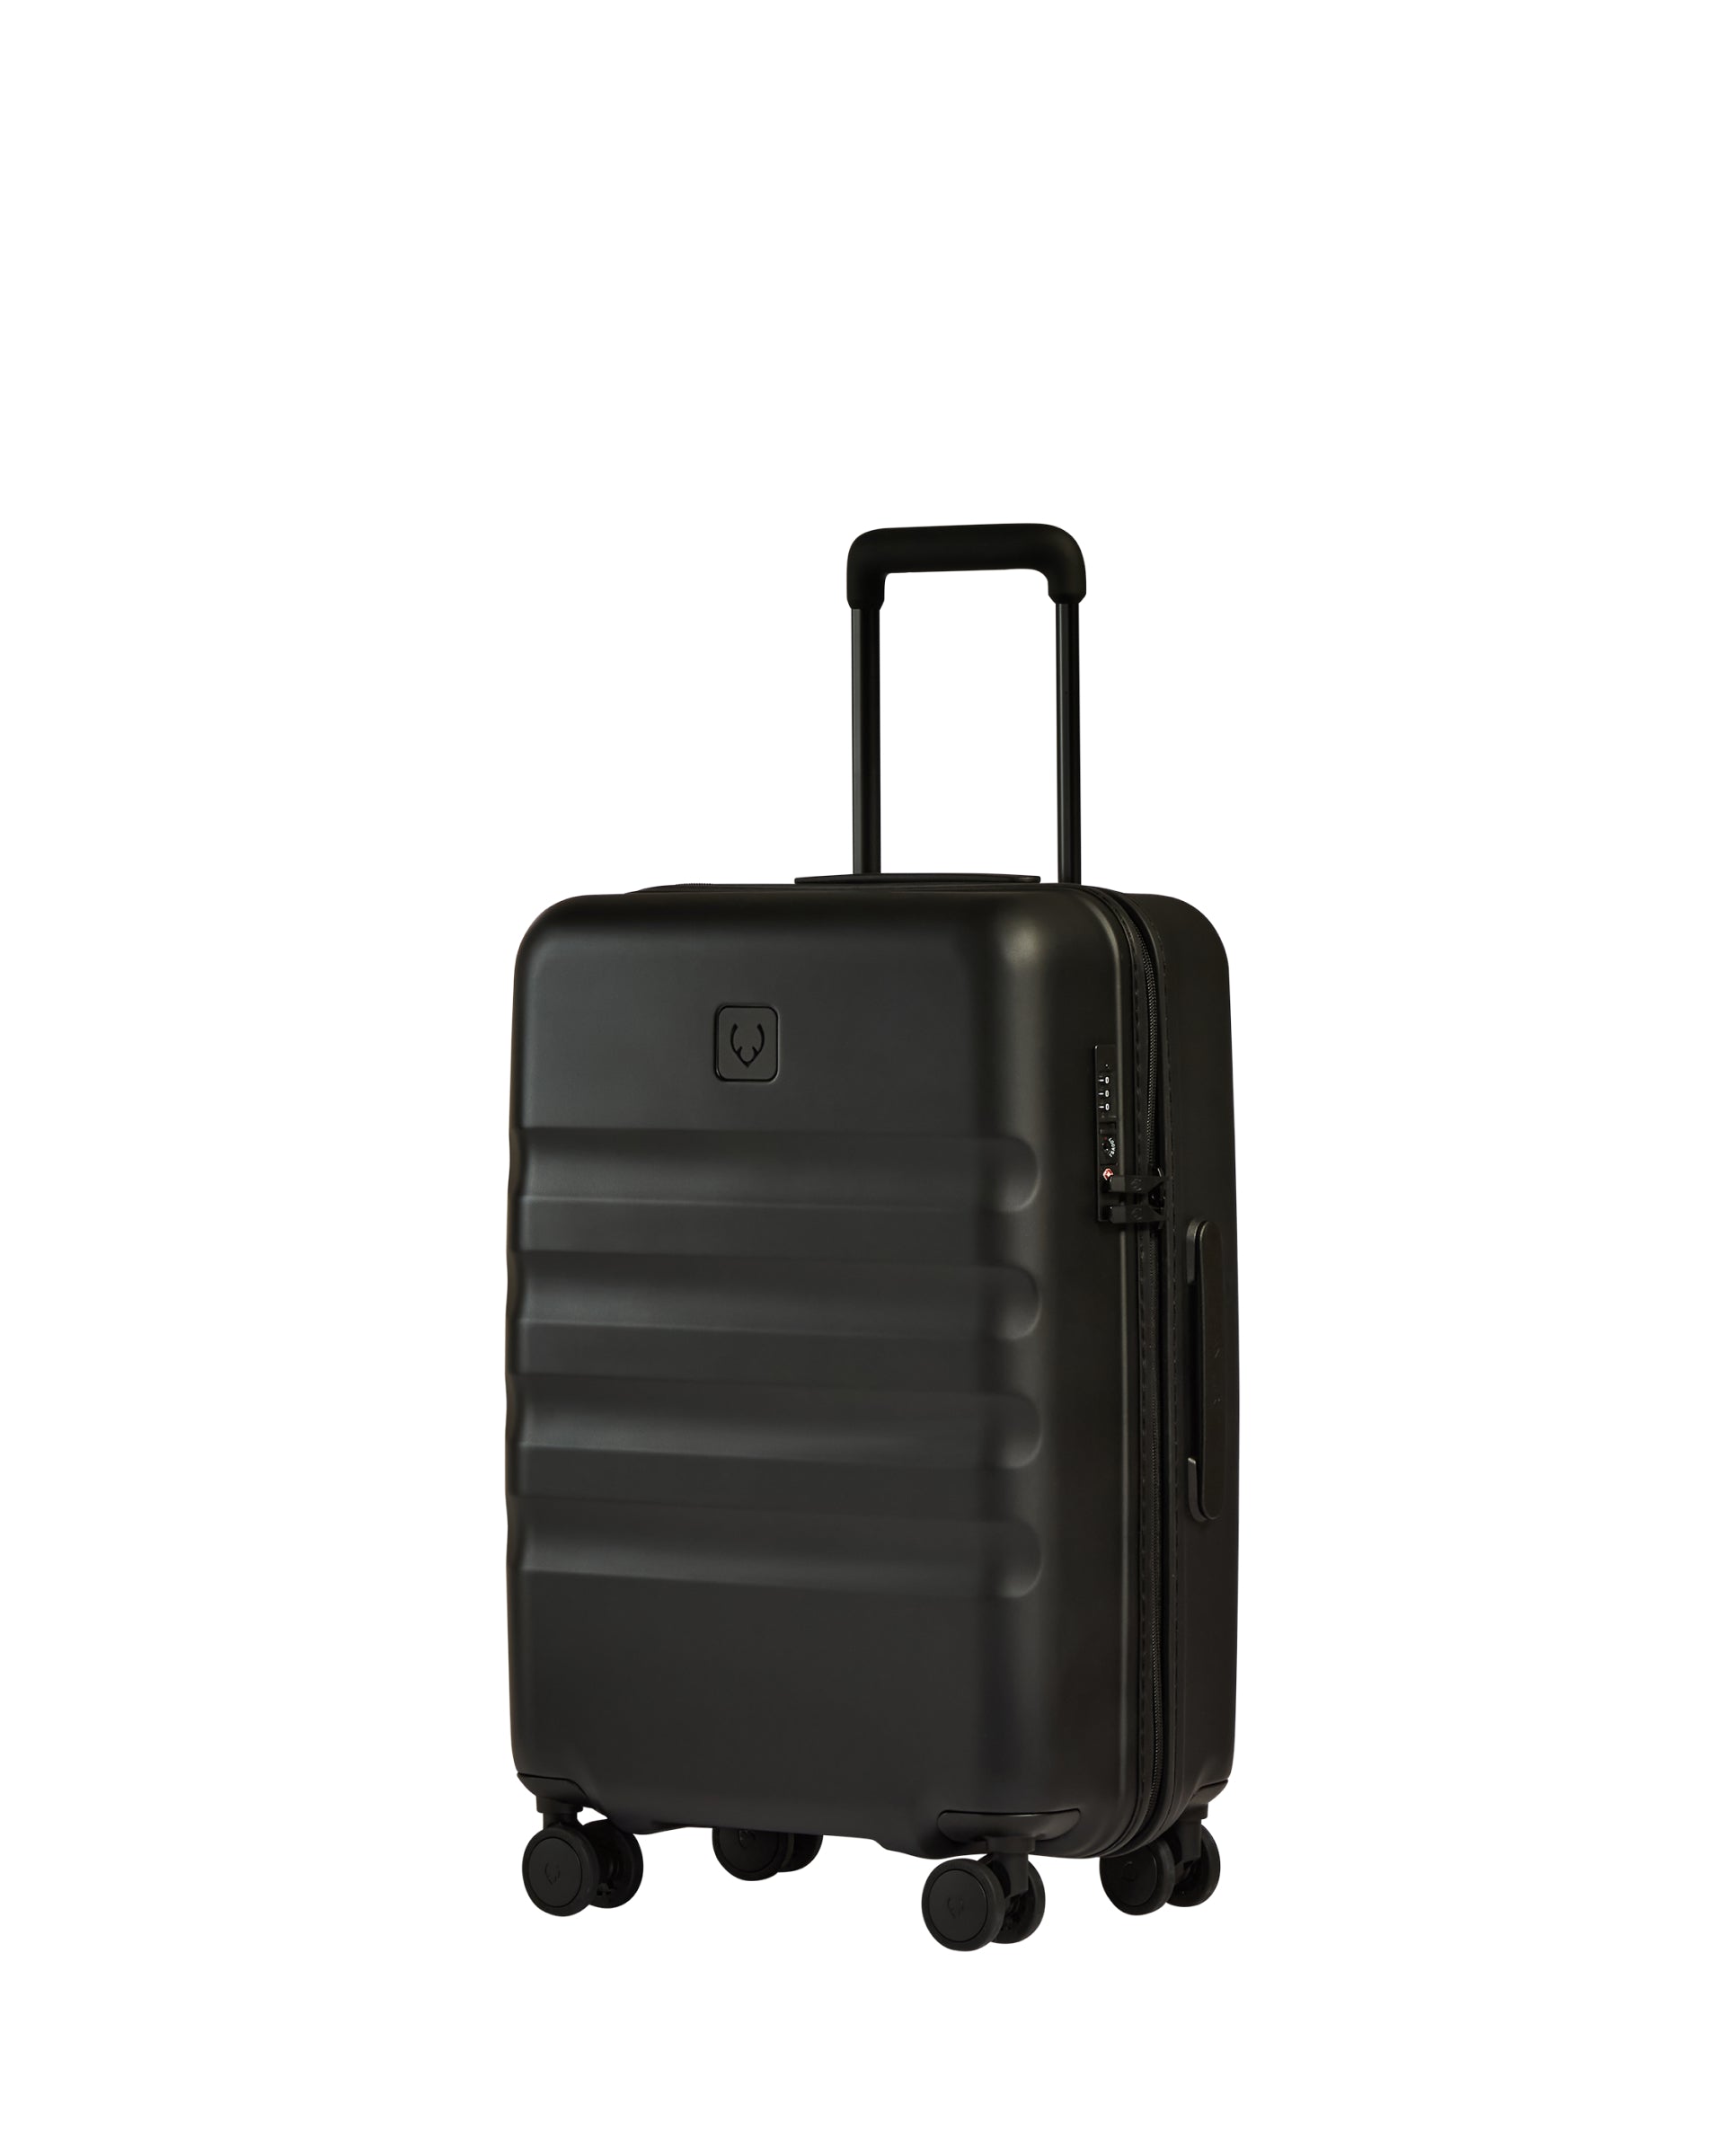 View Antler Icon Stripe Biggest Cabin Suitcase In Black Size 24cm x 58cm x 395cm information